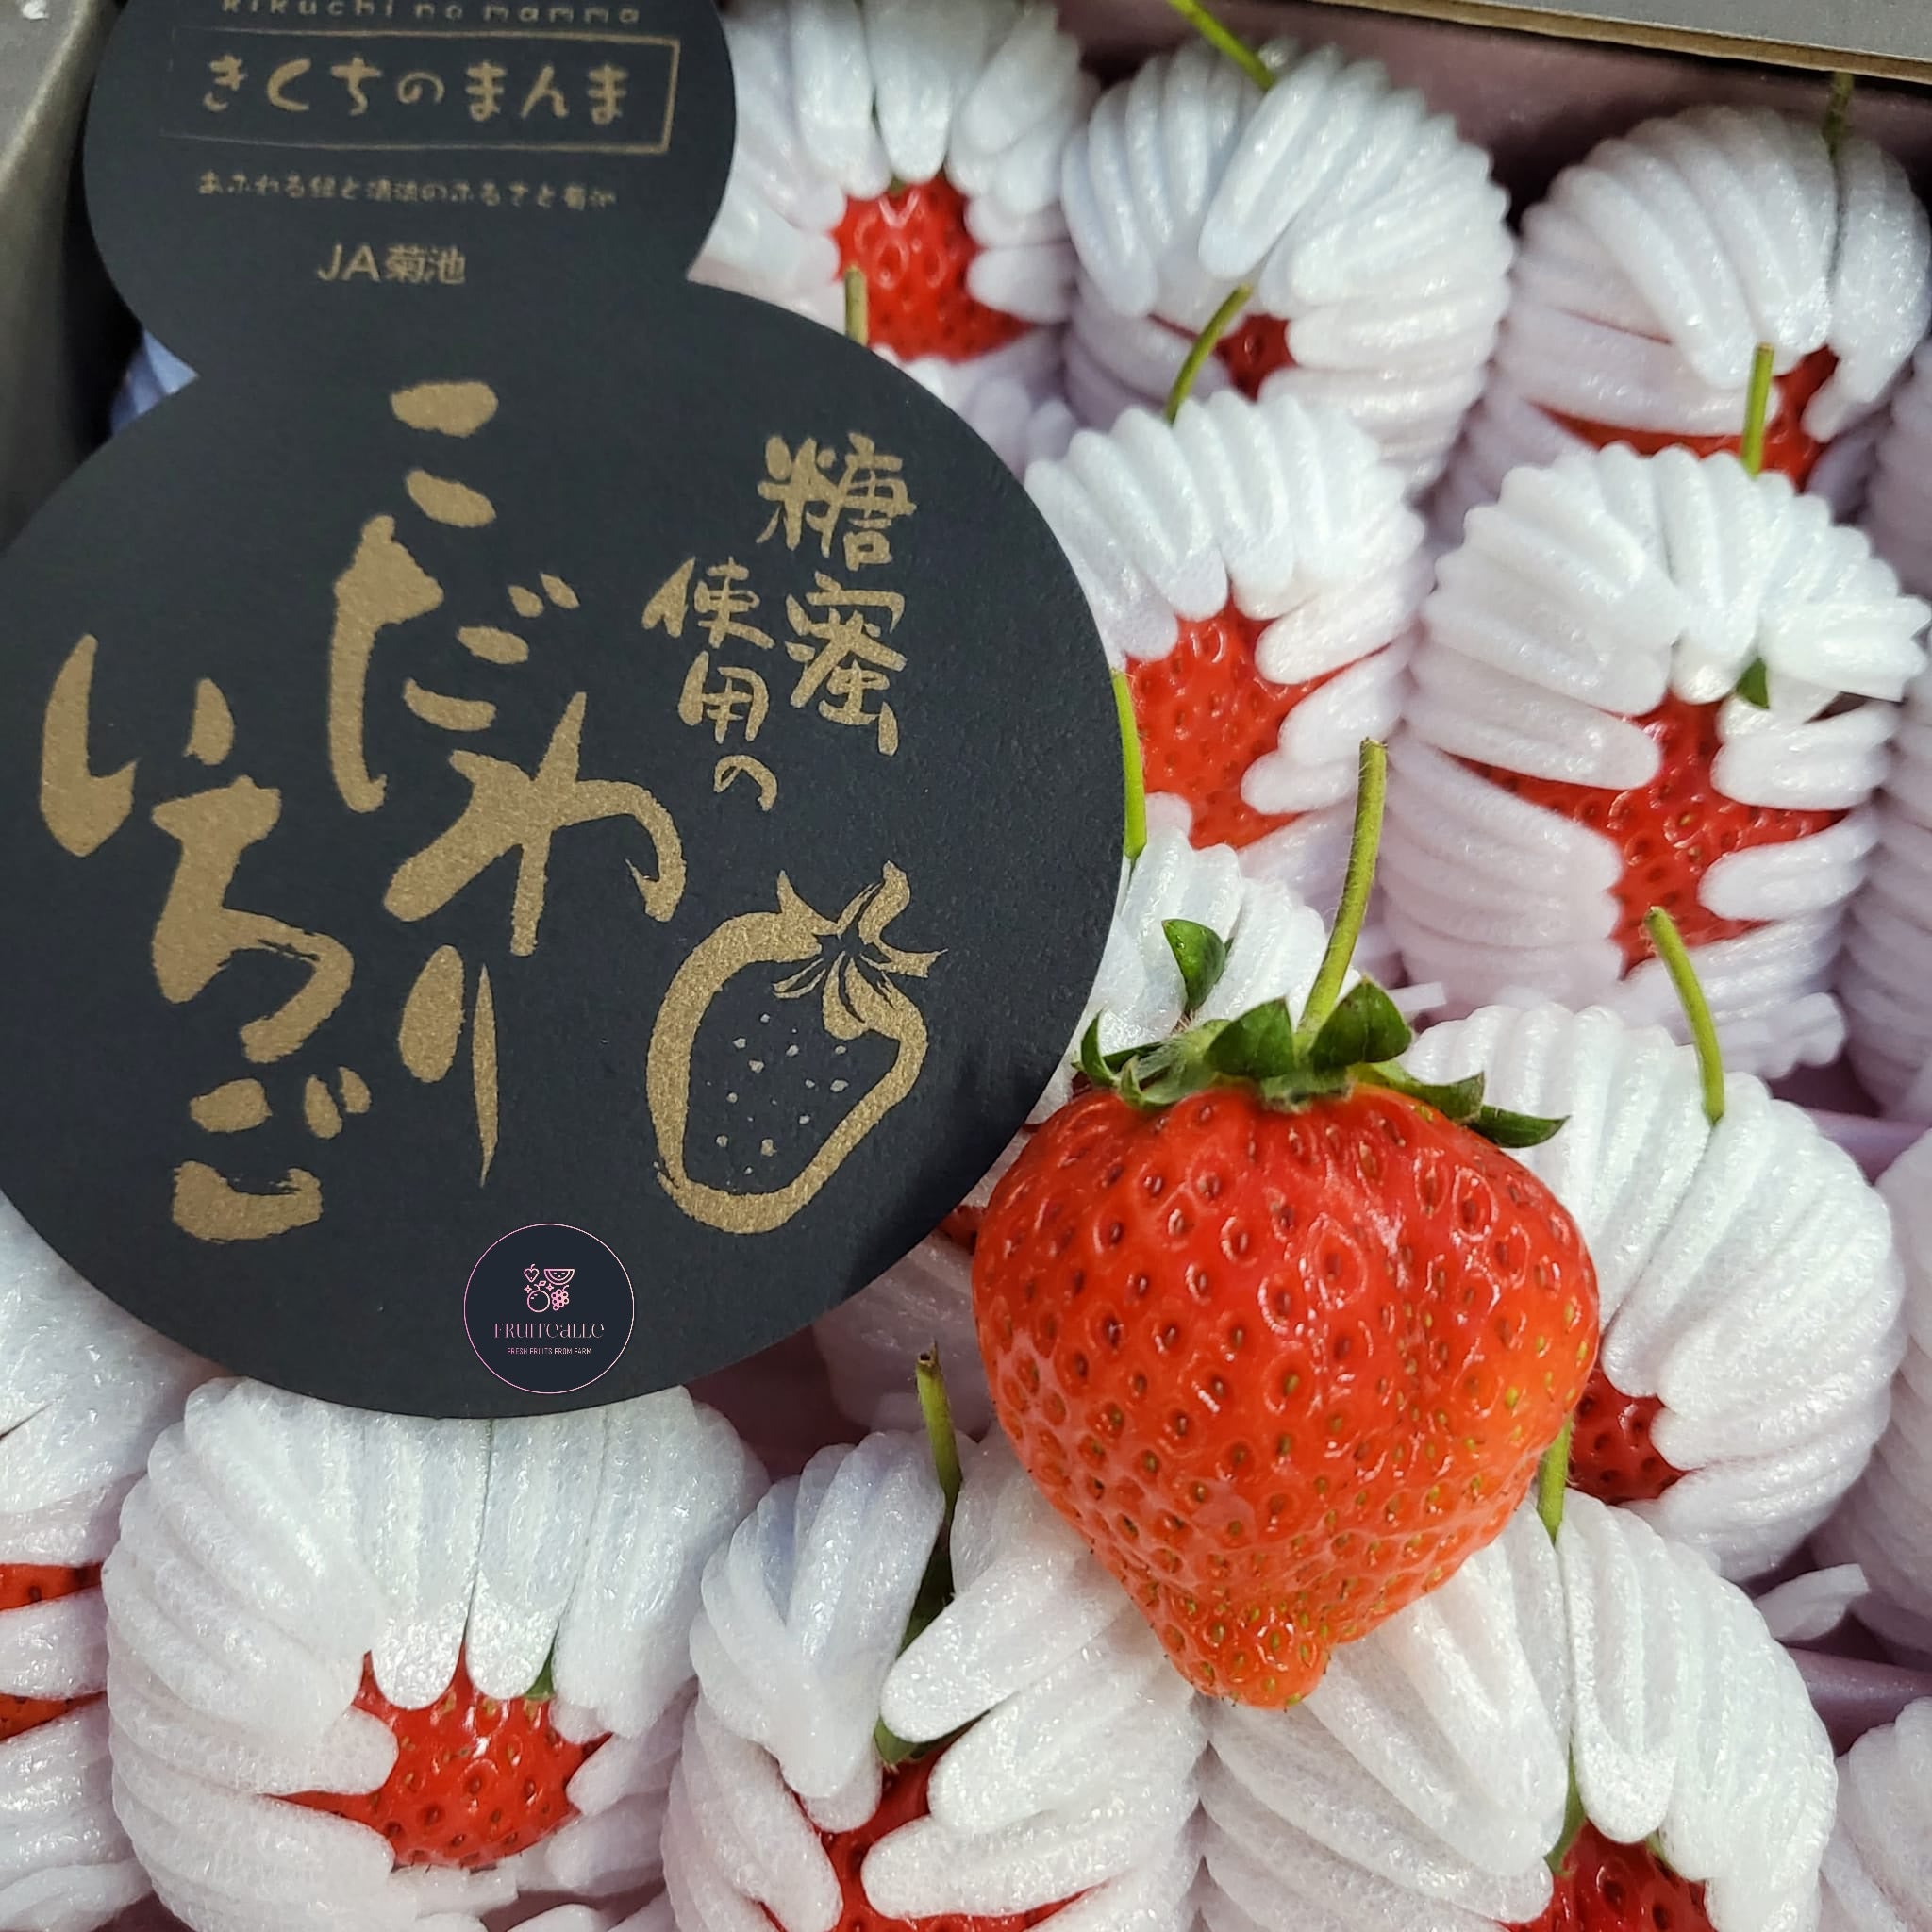 Japan Red Strawberry Yumenoka Ichigo 蜜糖草莓 ゆめのかいちご Fruitealle Pte Ltd